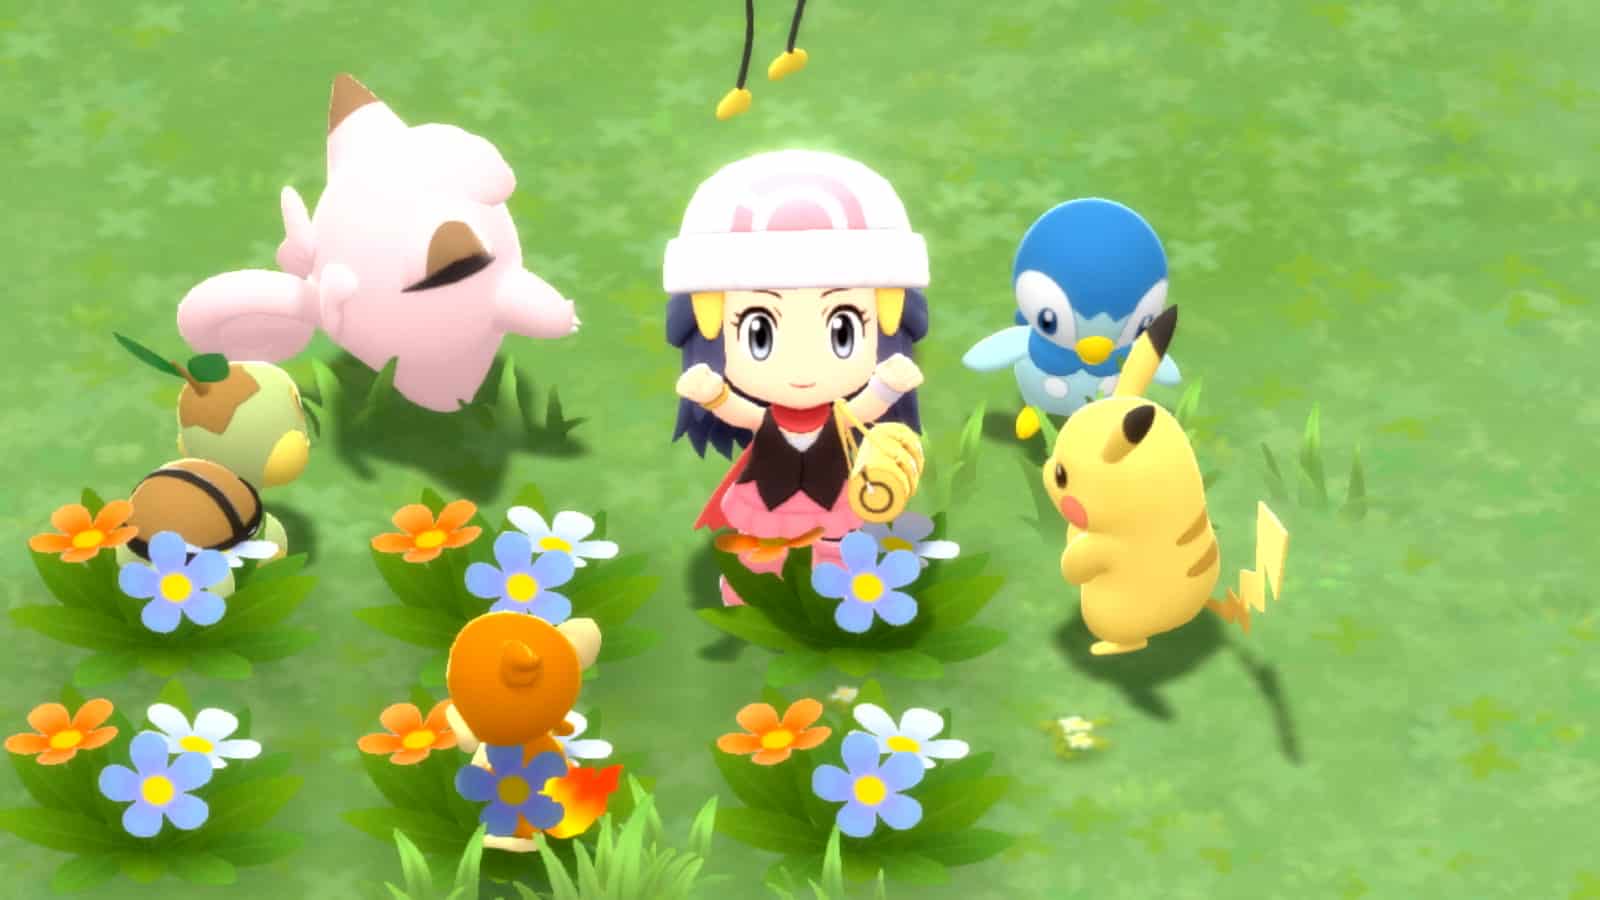 Pokemon in the flowers